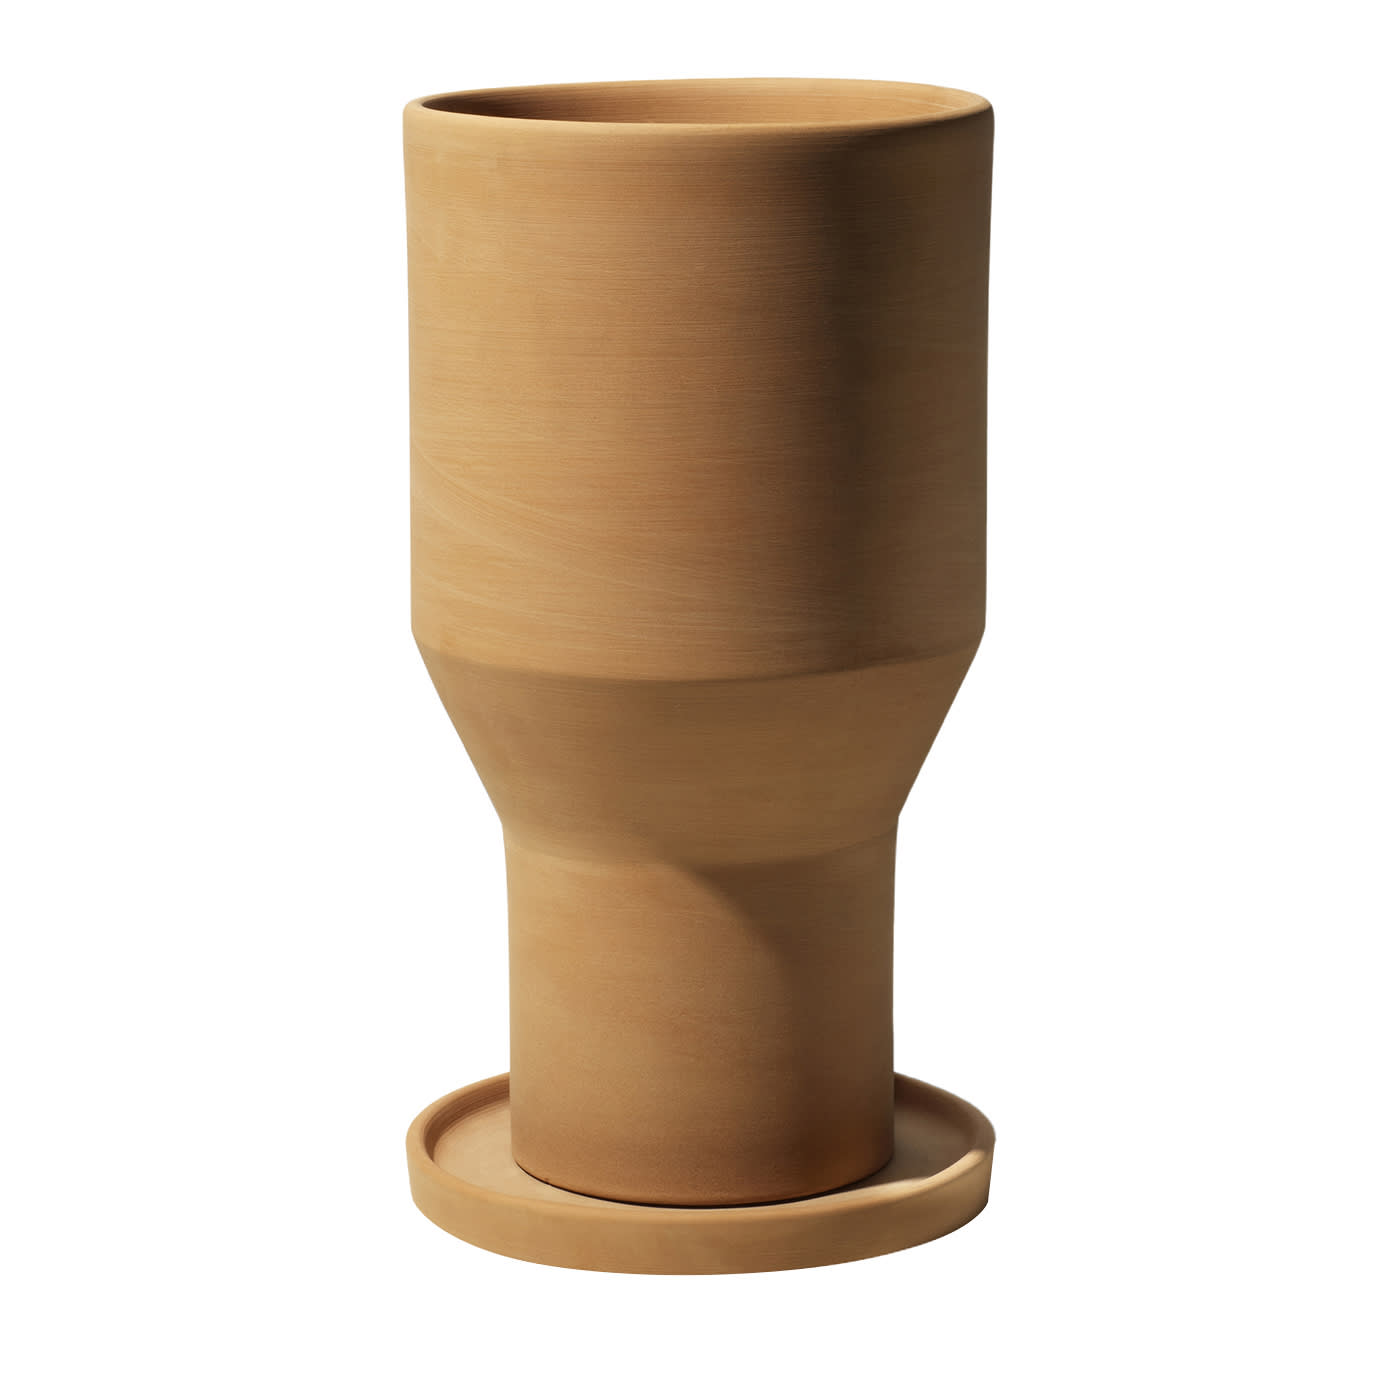 Pila Set of Terracotta Vase and Plant Saucer - Internoitaliano